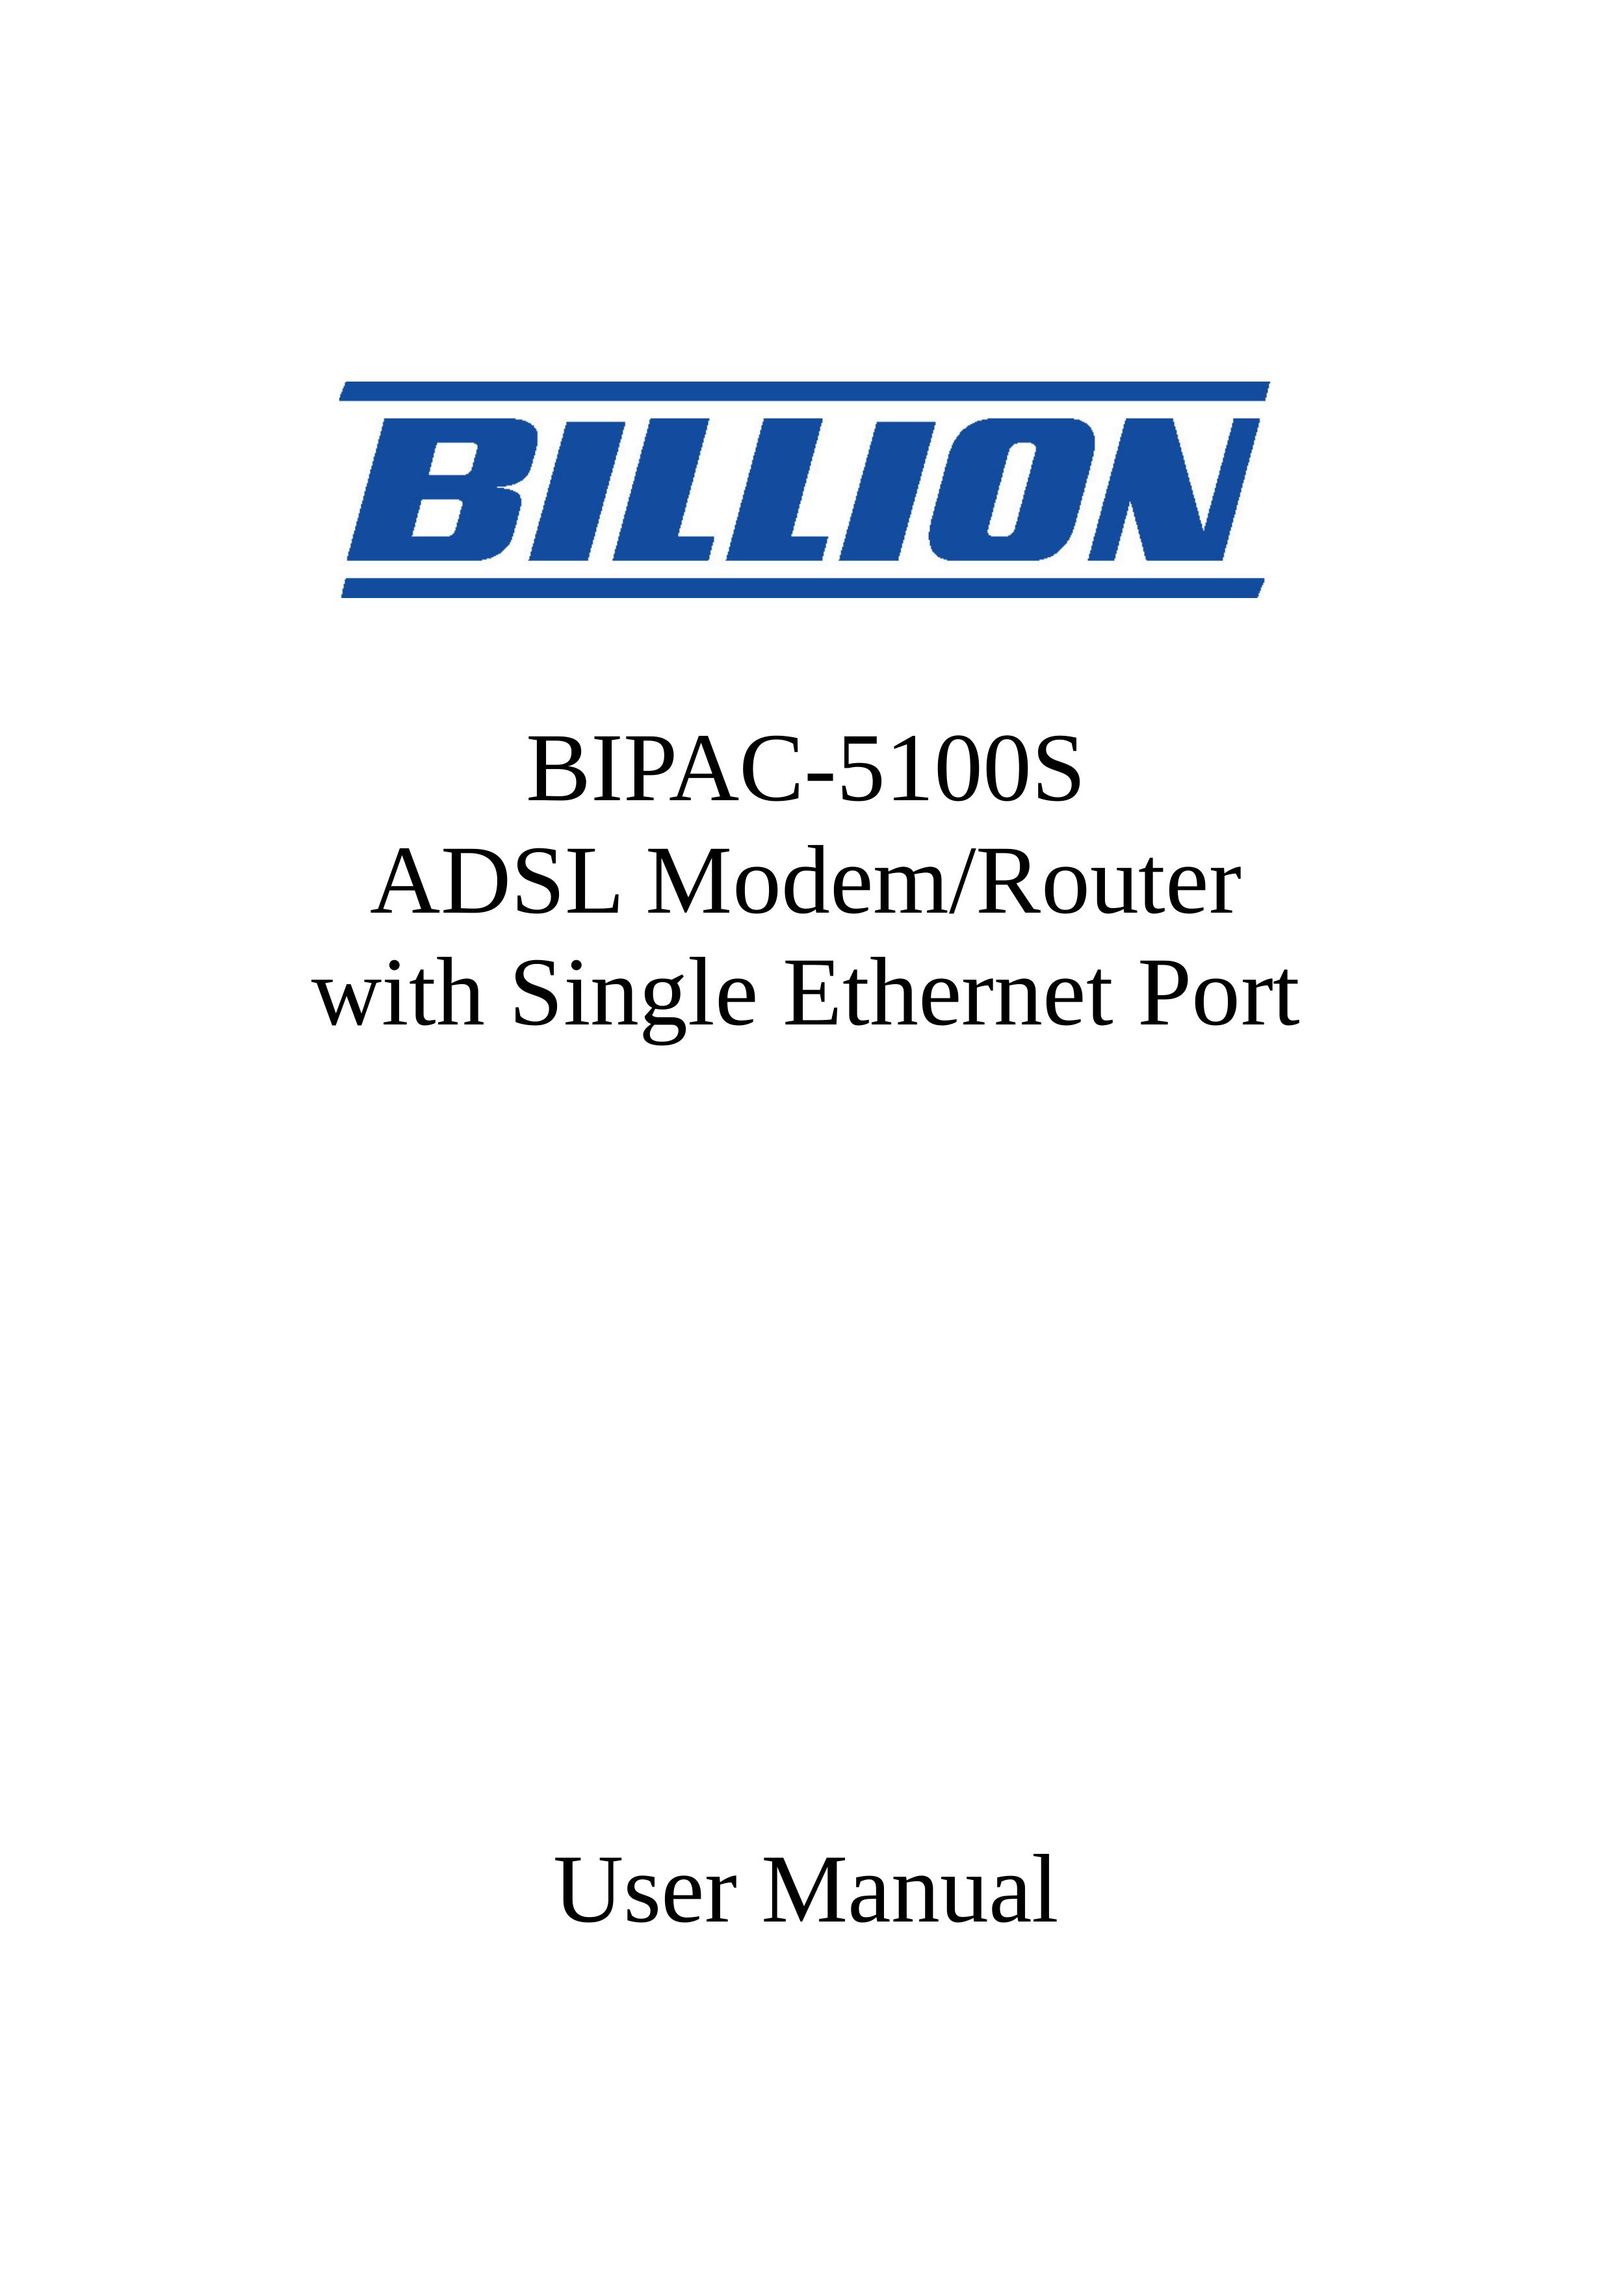 Billion Electric Company BIPAC-5100S Switch User Manual